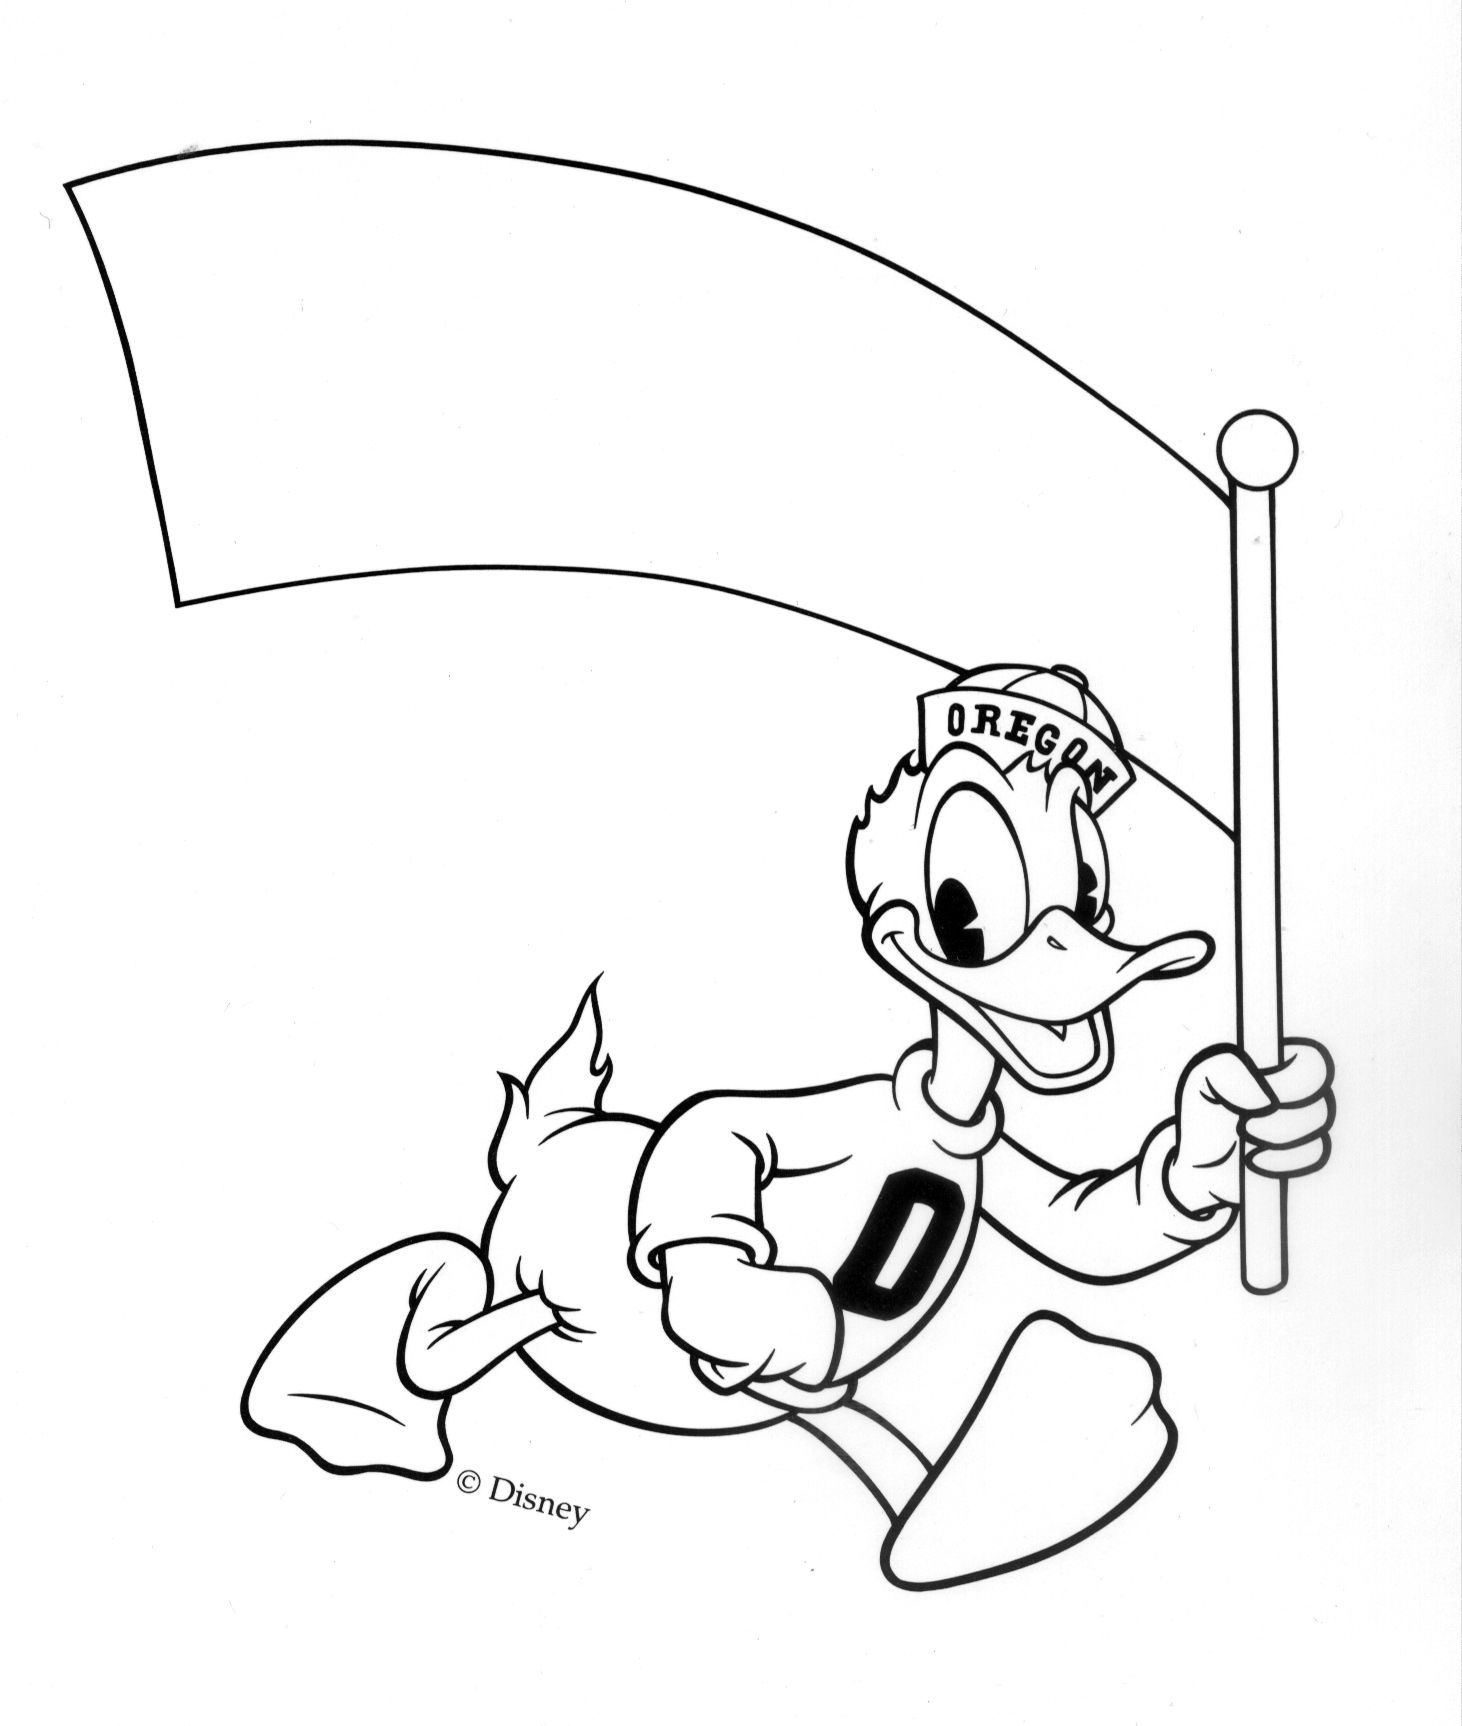 Old school oregon cheer logo oregon ducks logo oregon ducks duck drawing